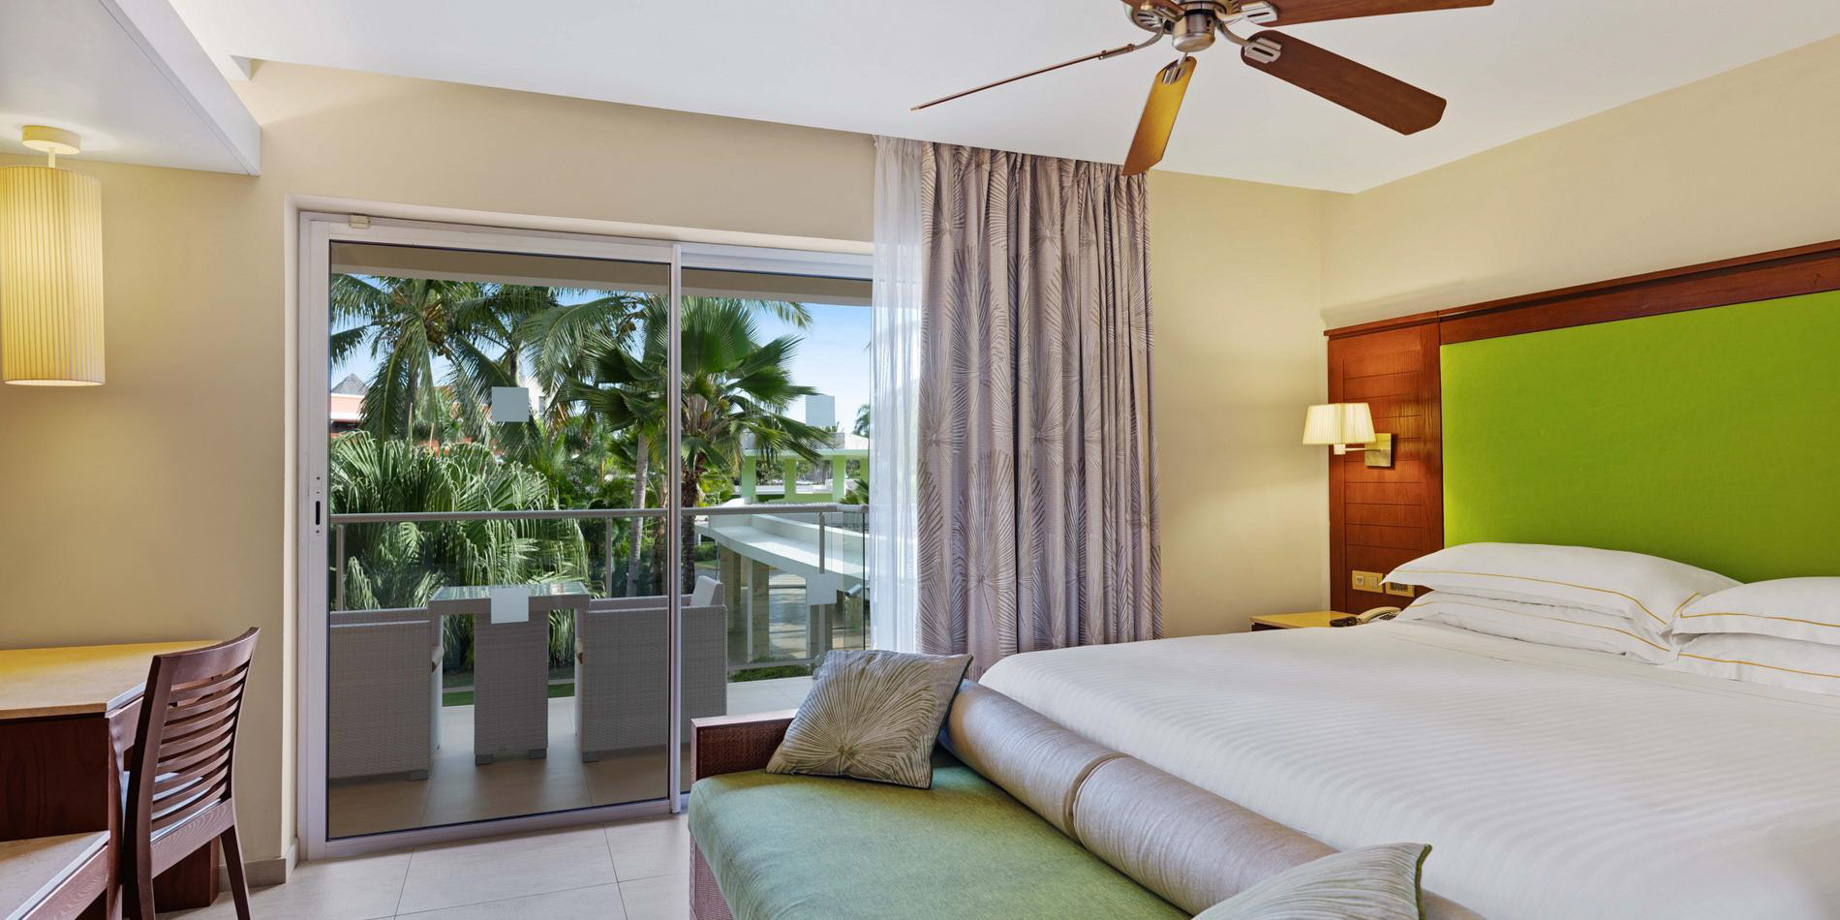 Barceló Bávaro Palace Hotel Grand Resort – Punta Cana, Dominican Republic – Family Room